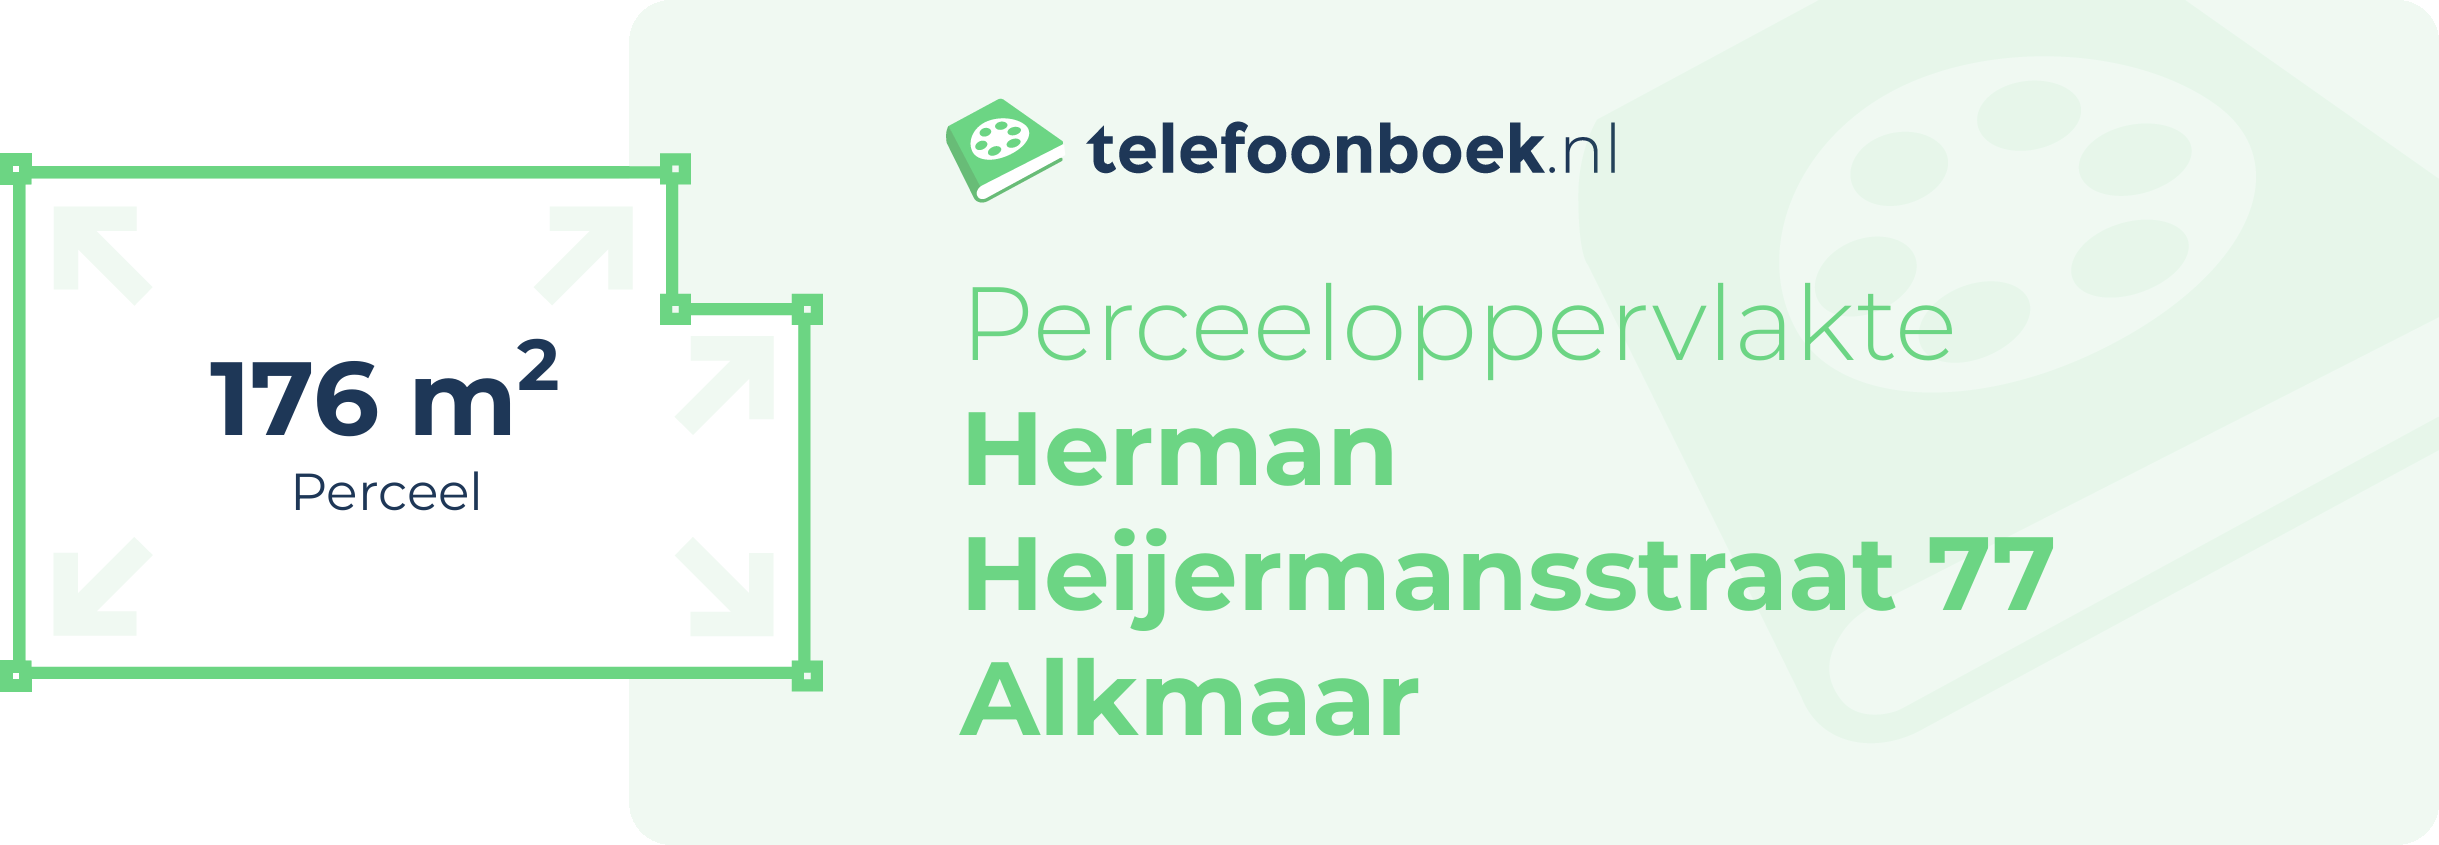 Perceeloppervlakte Herman Heijermansstraat 77 Alkmaar